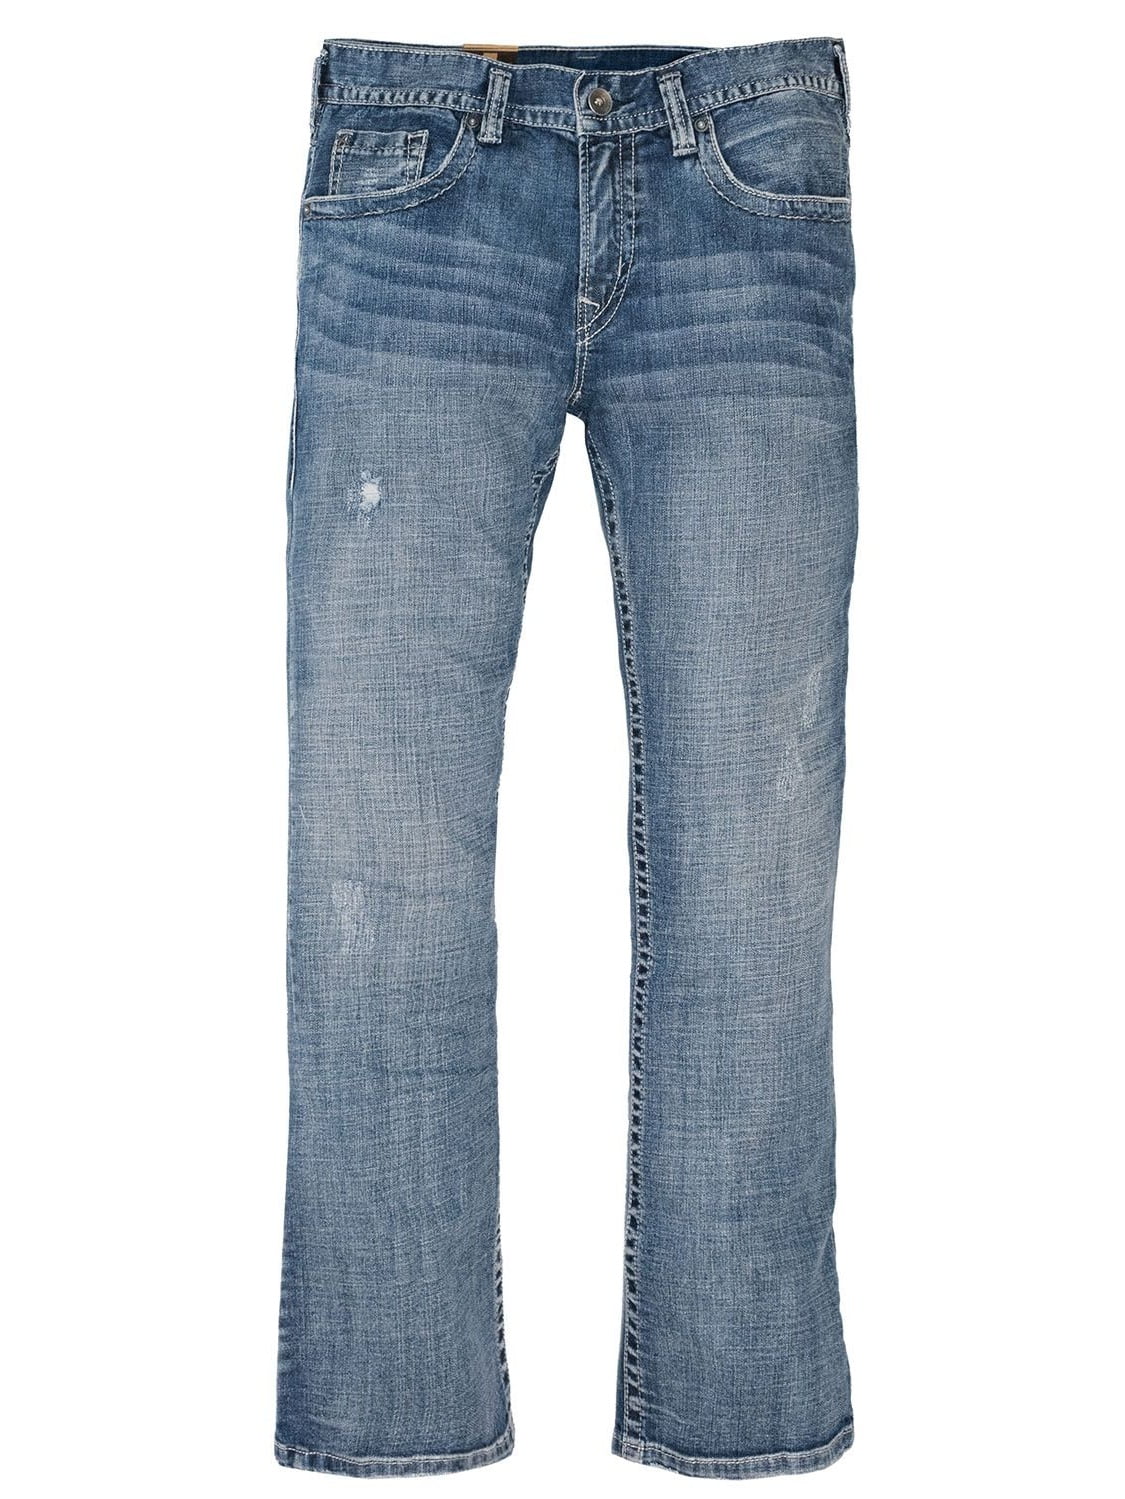 T.K. AXEL MFG Co. Mens Jeans Vintage Boot Denim (Weston, 30 x 32 ...